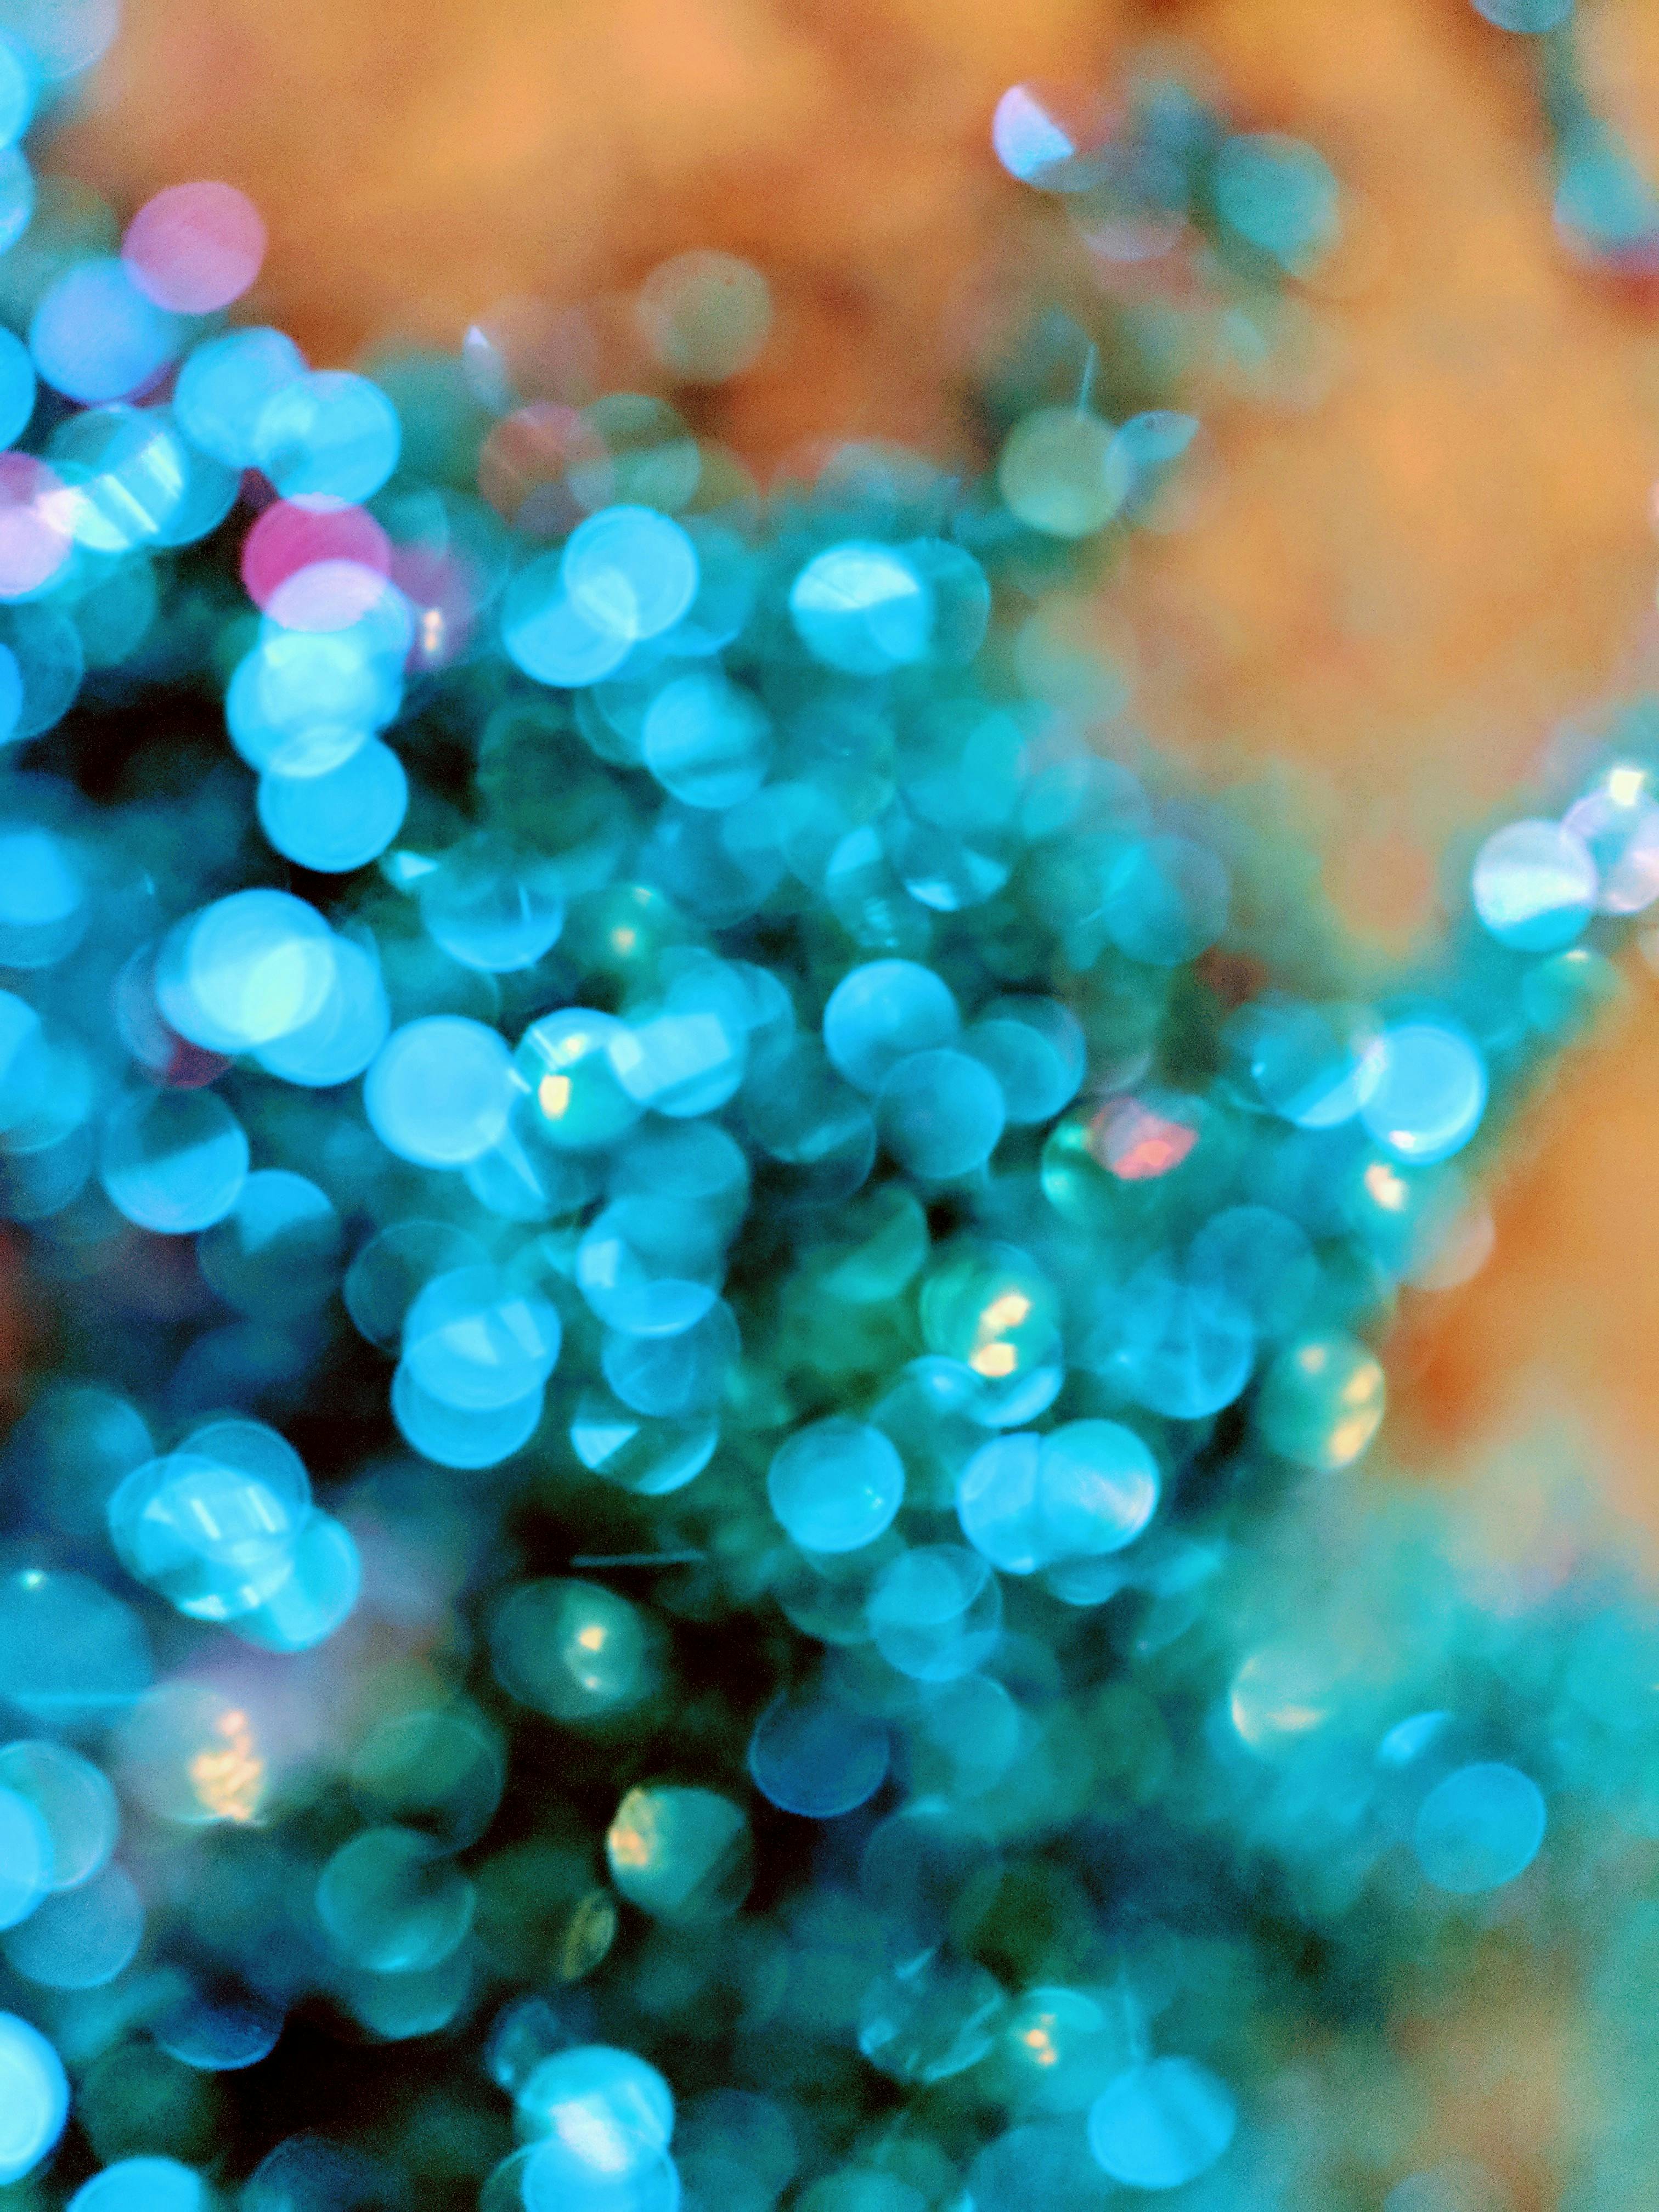 Free stock photo of bling, blue glitter, circles art